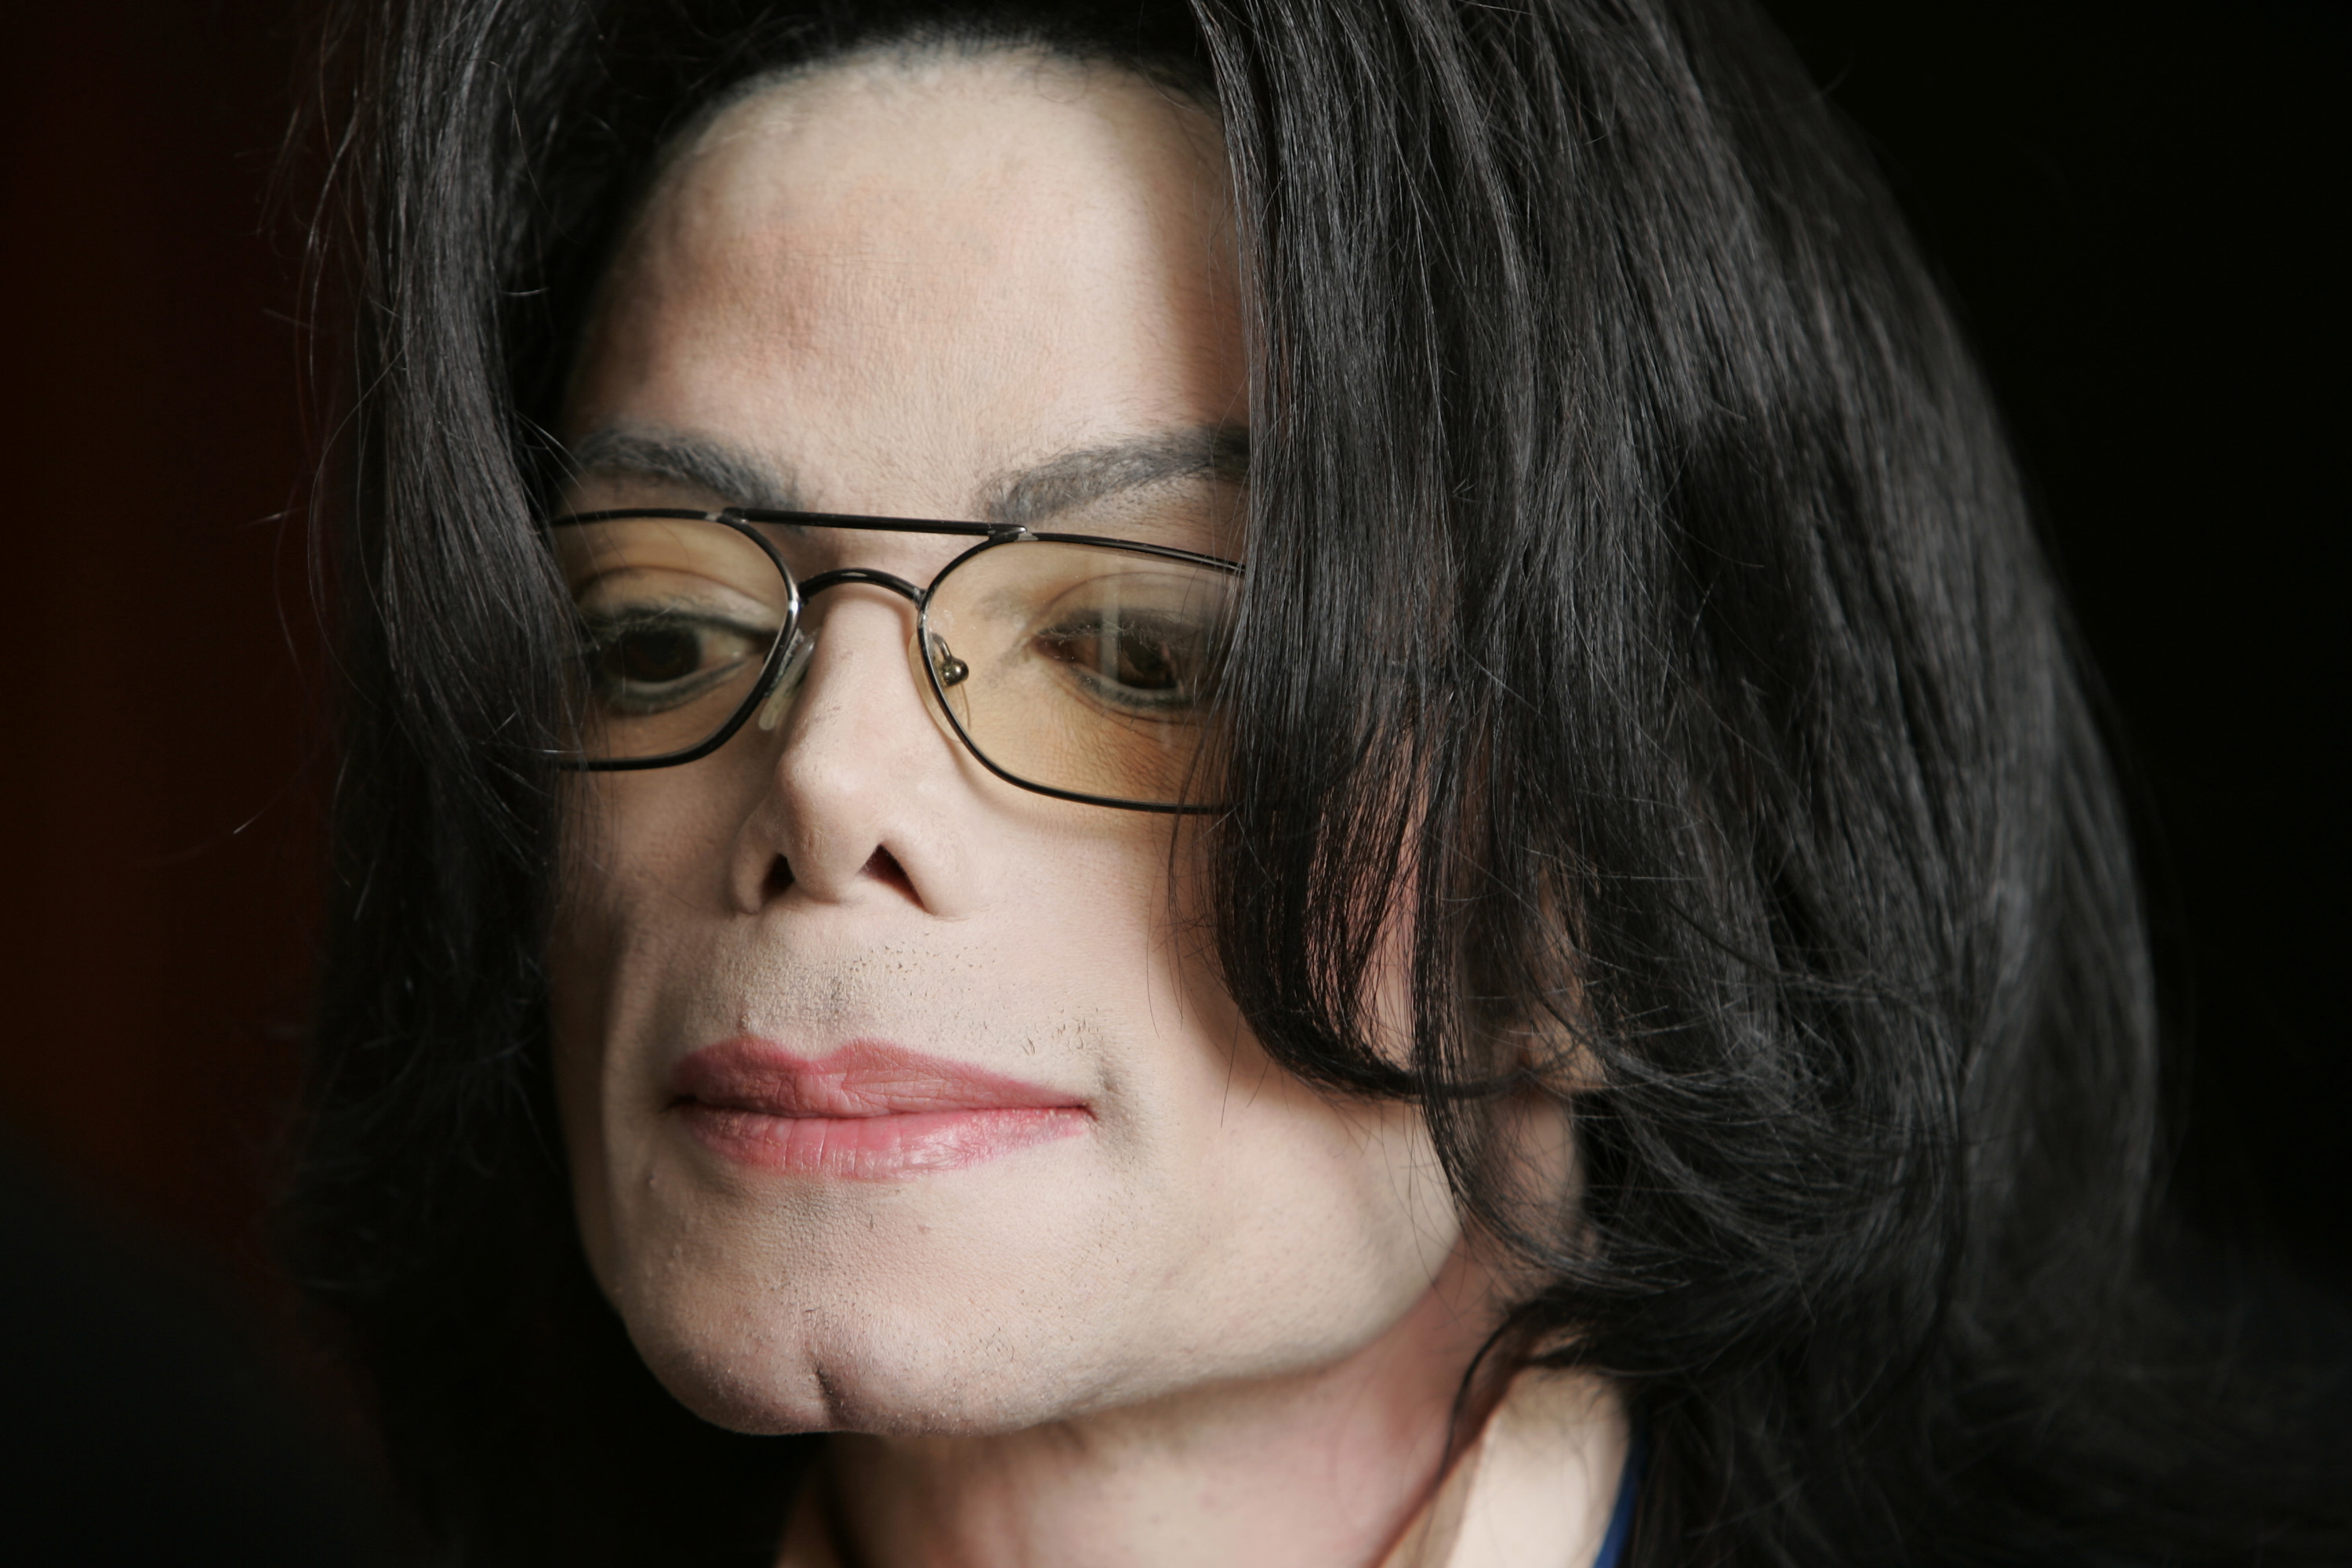 Assistent, HBTQ, Michael Jackson, The King of Pop, USA, Älskare, Homosexualitet, Död